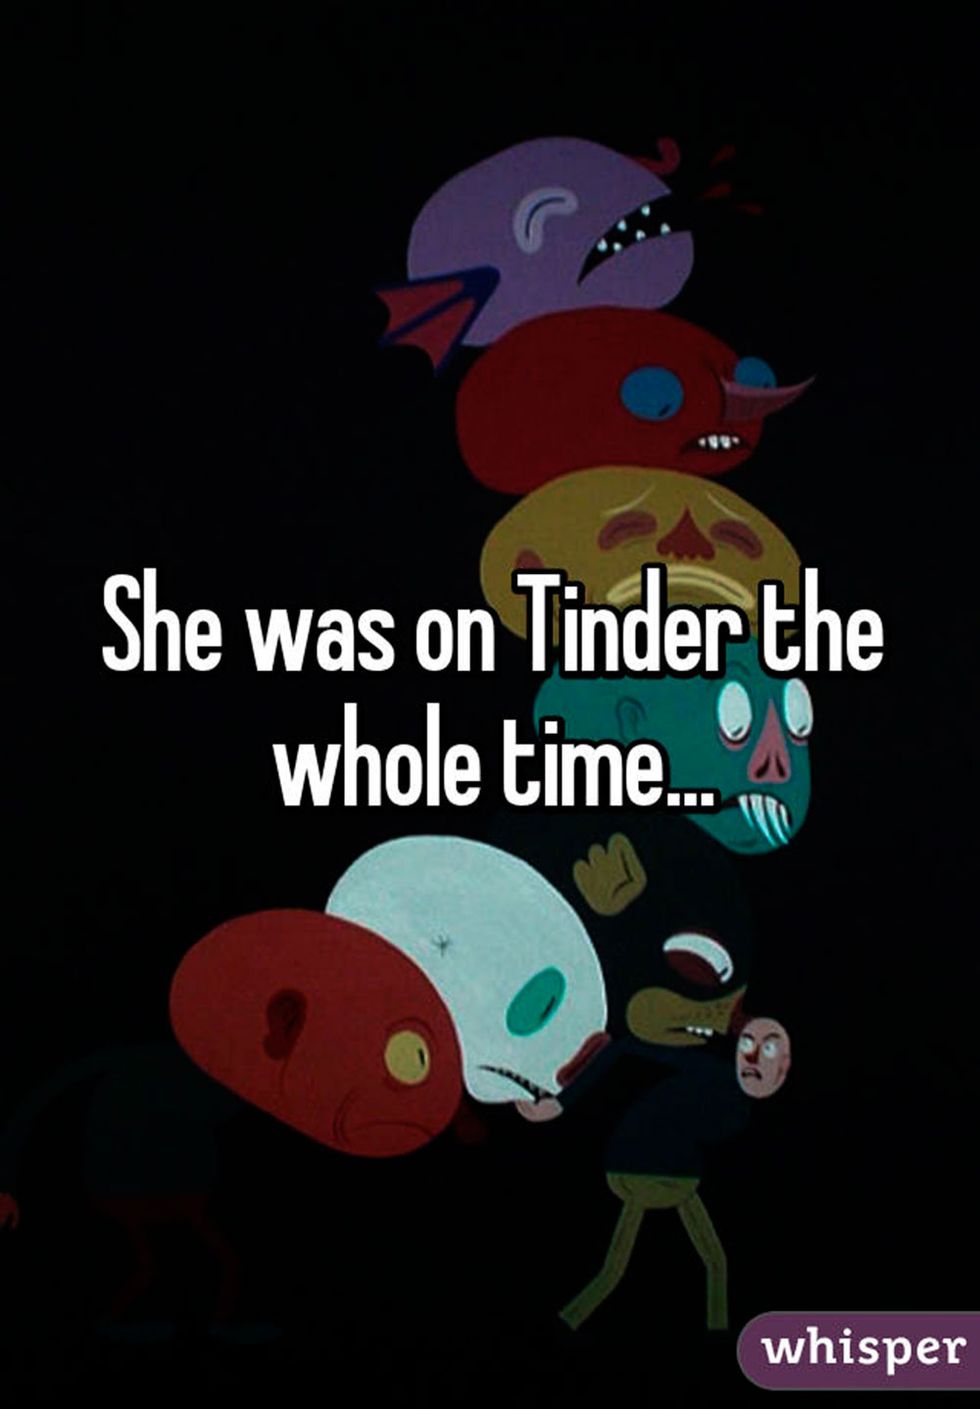 Awkward tinder date story Whisper